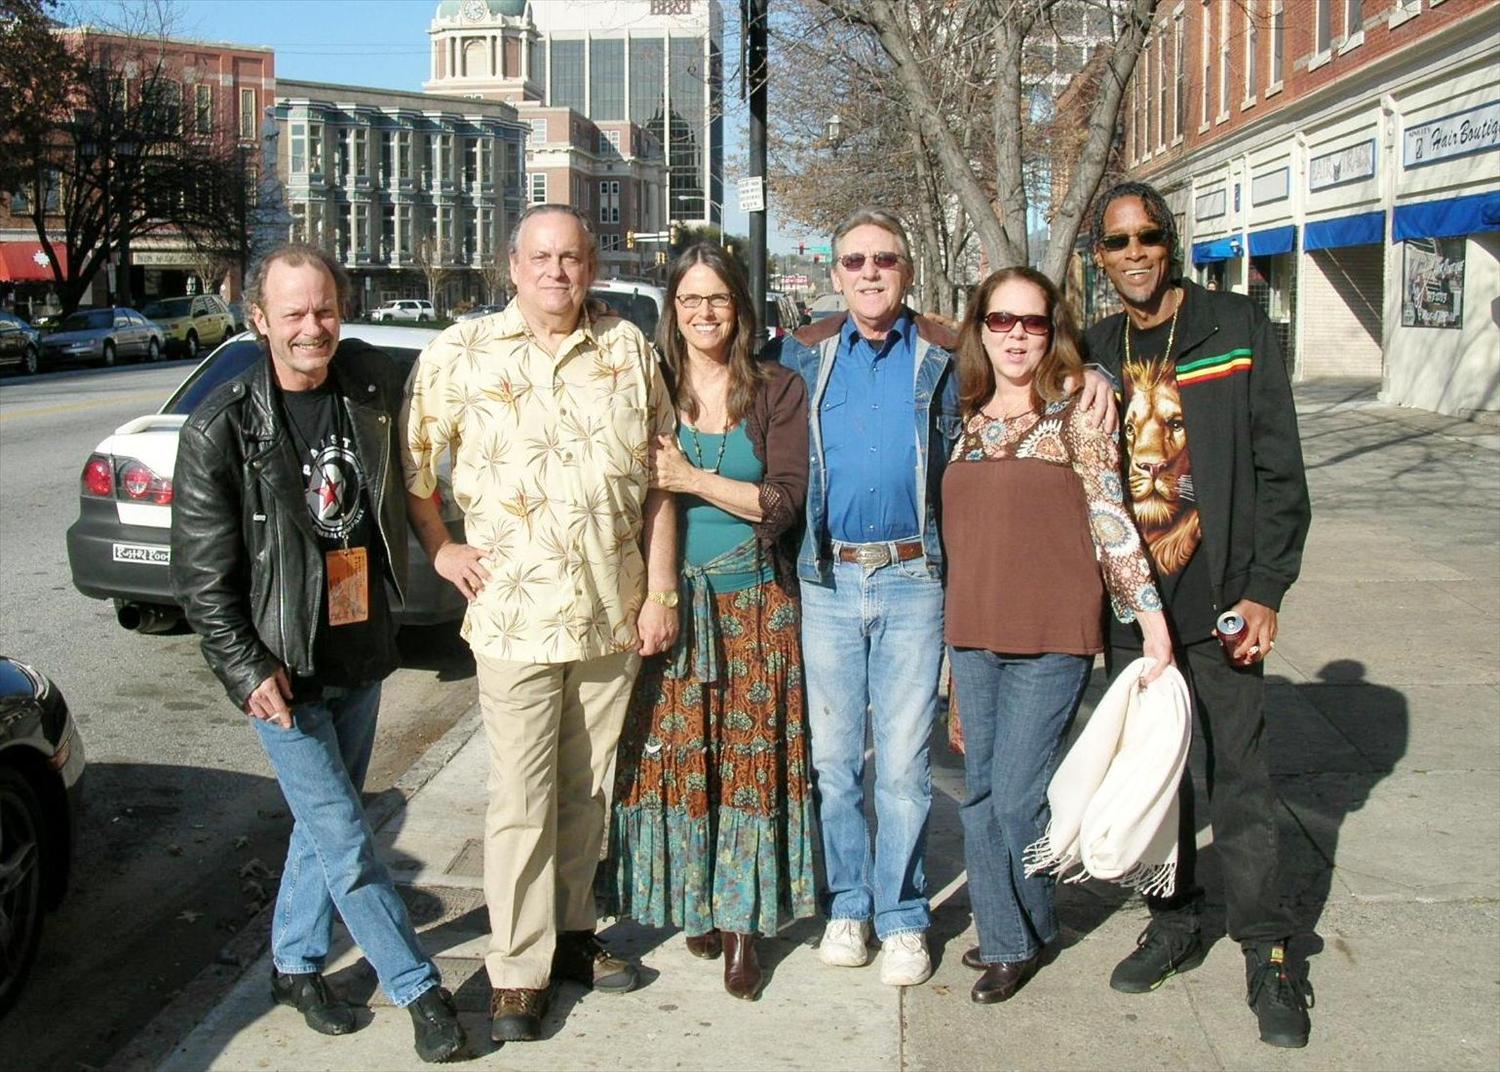 Skoots Lyndon, Willie Perkins, Kirsten West, Kim Payne, Judi Petty, & Chank Middleton at Macon Premier of A.B.B. Movie 